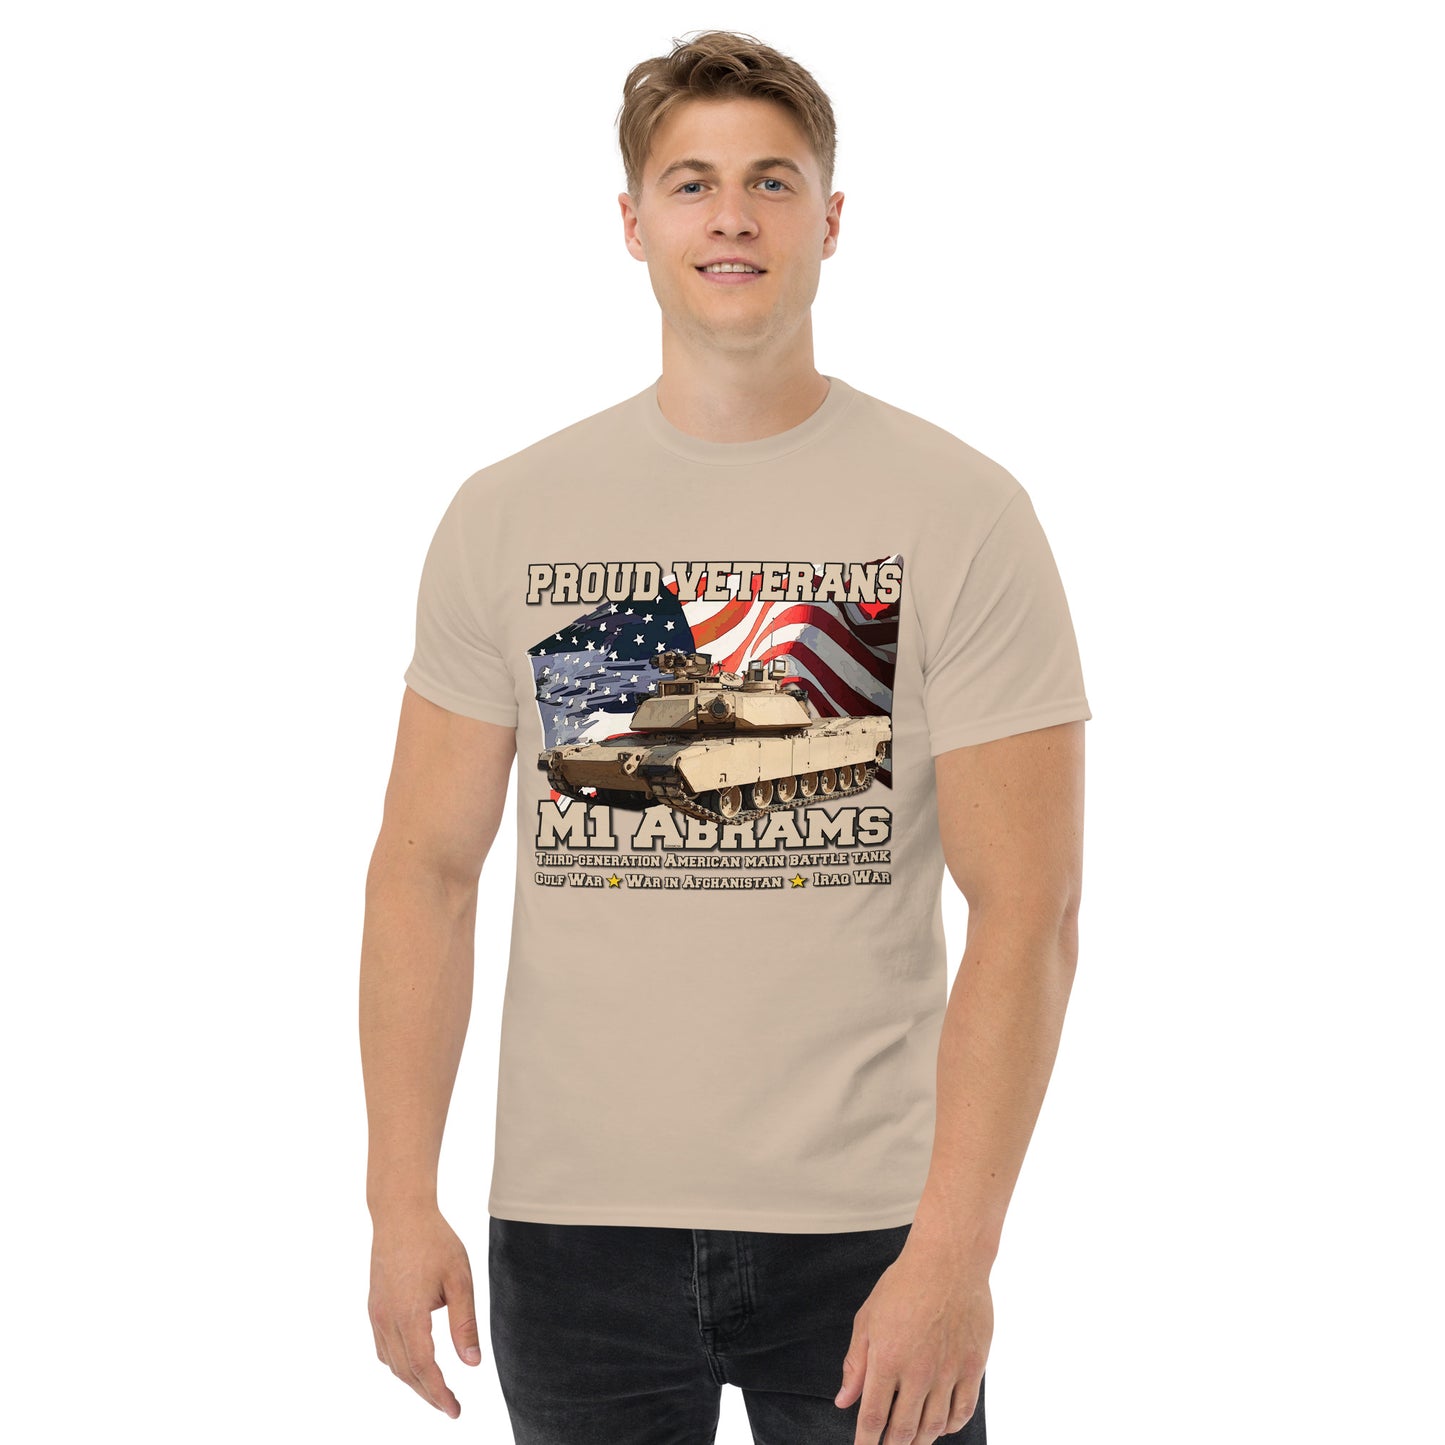 M1 Abrams Tank Proud Veterans t-shirt